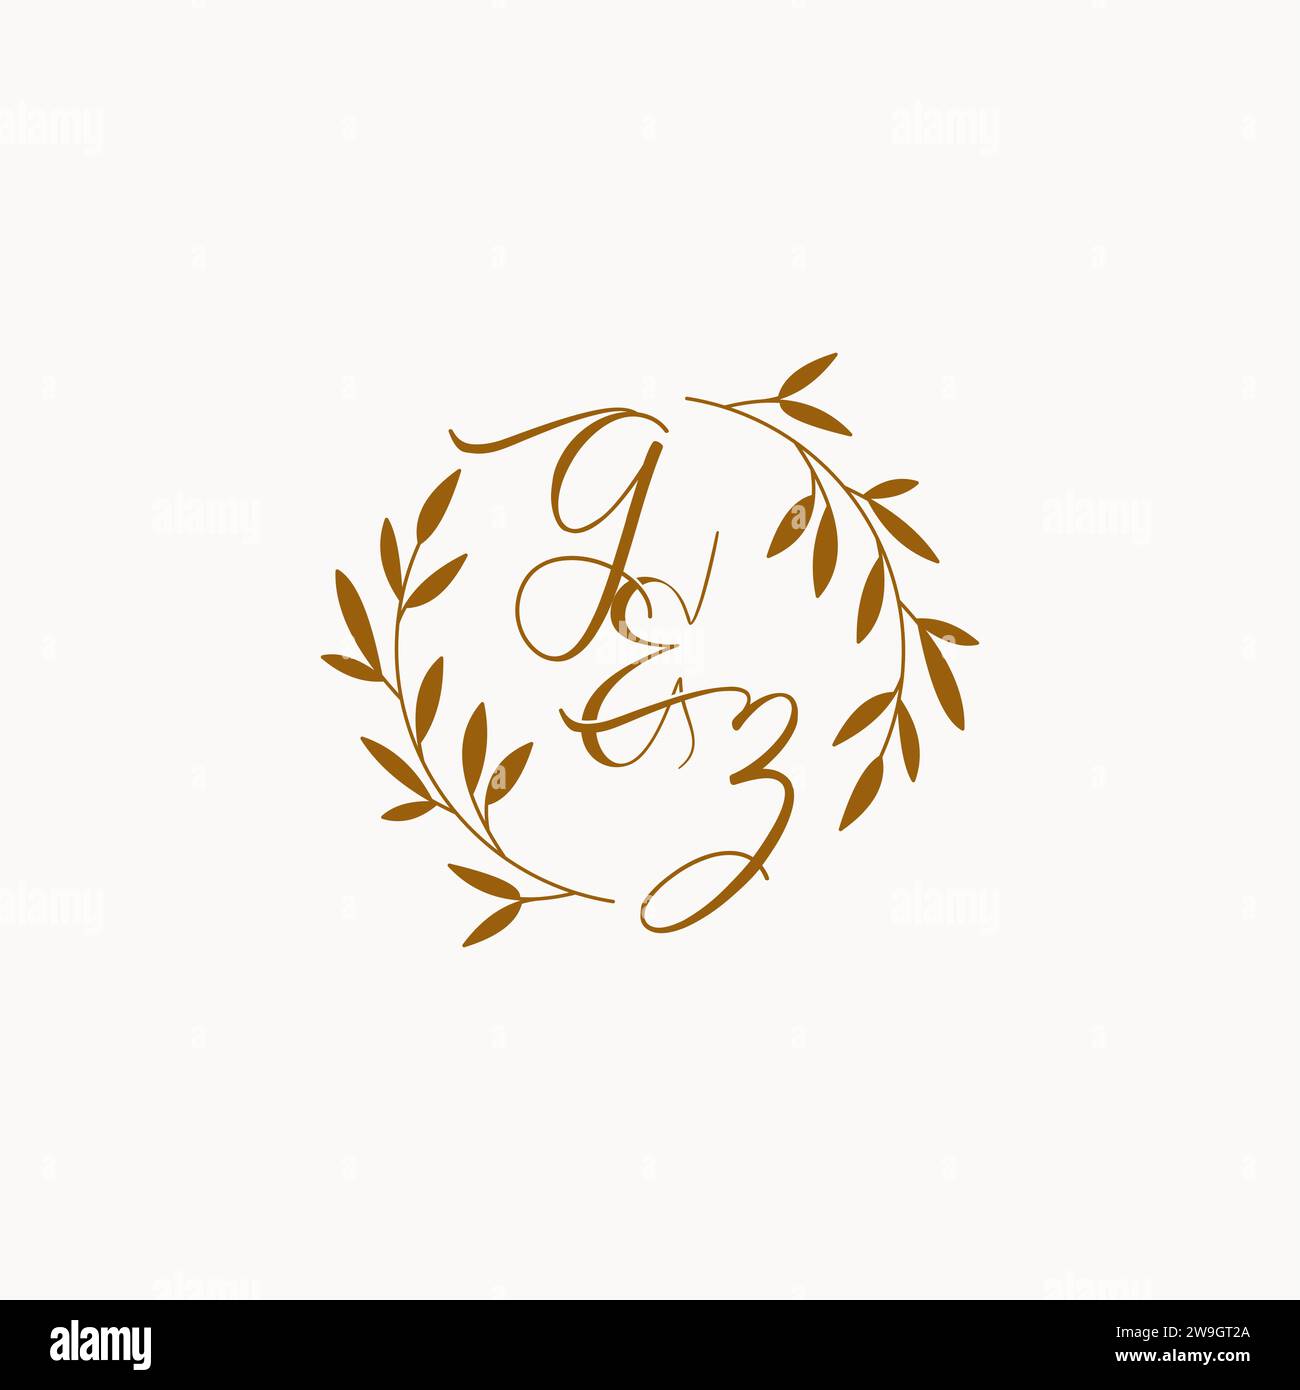 GZ initial wedding monogram logo design Stock Vector